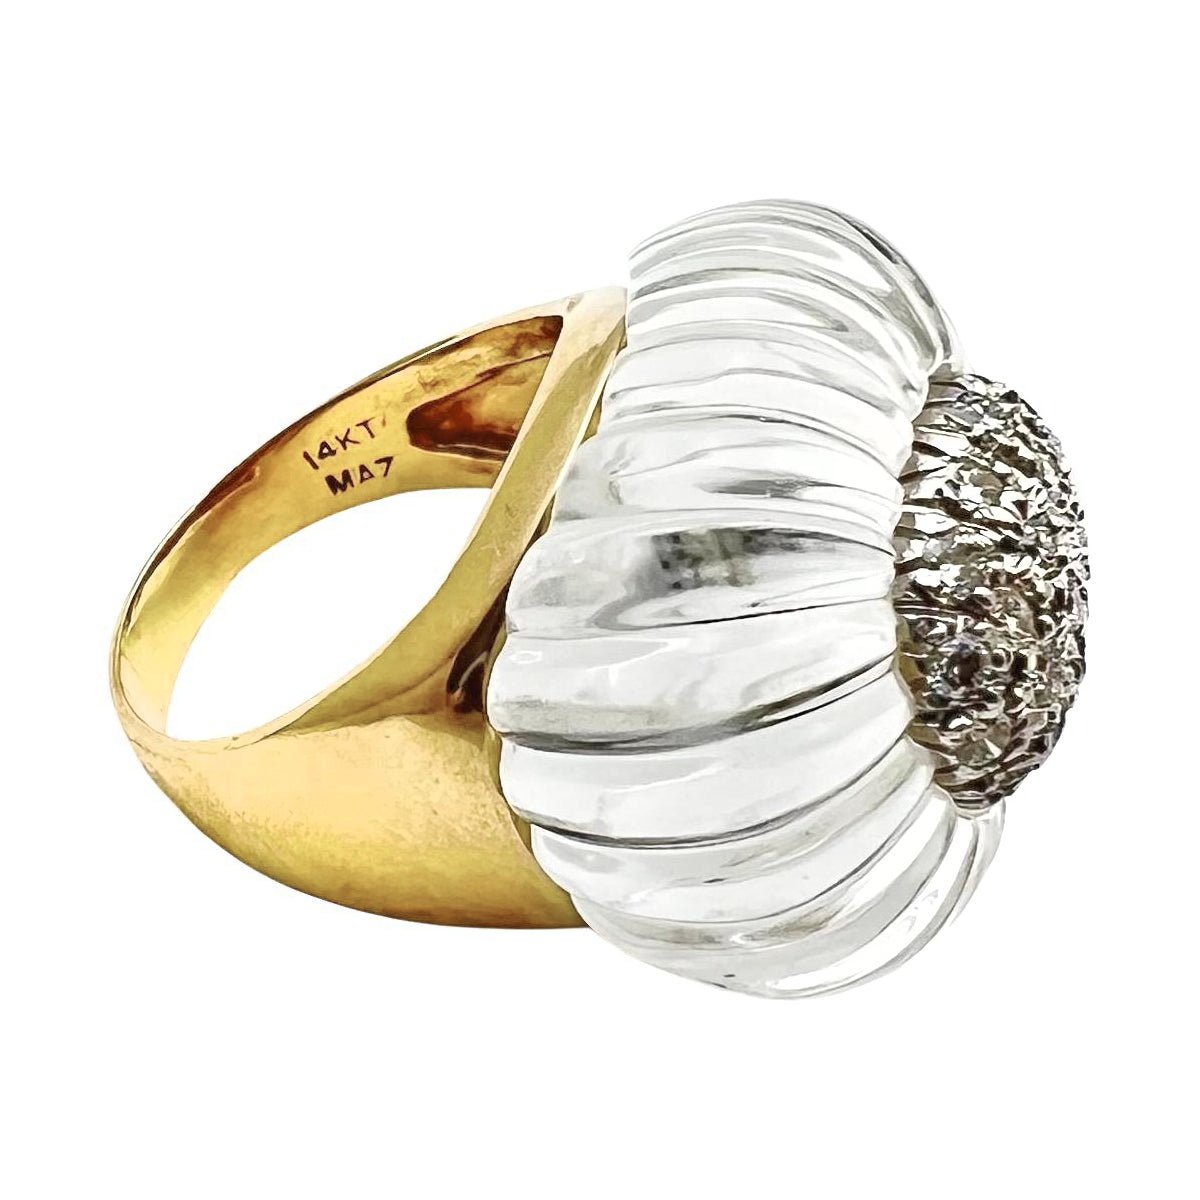 MAZ - Rock Crystal Pavé Diamond Cocktail Ring